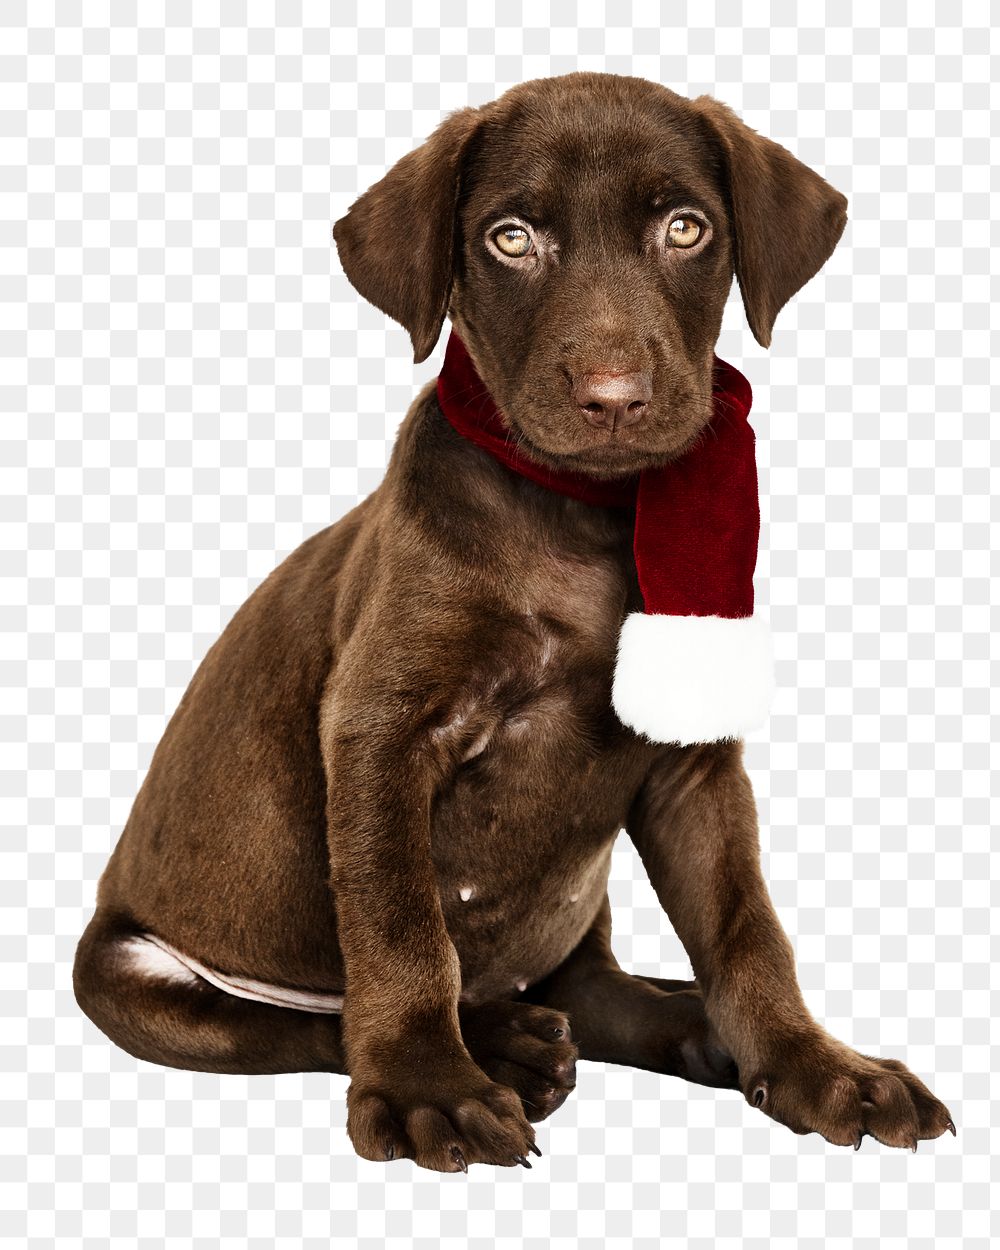 Christmas png puppy sticker, Labrador Retriever collage element on transparent background